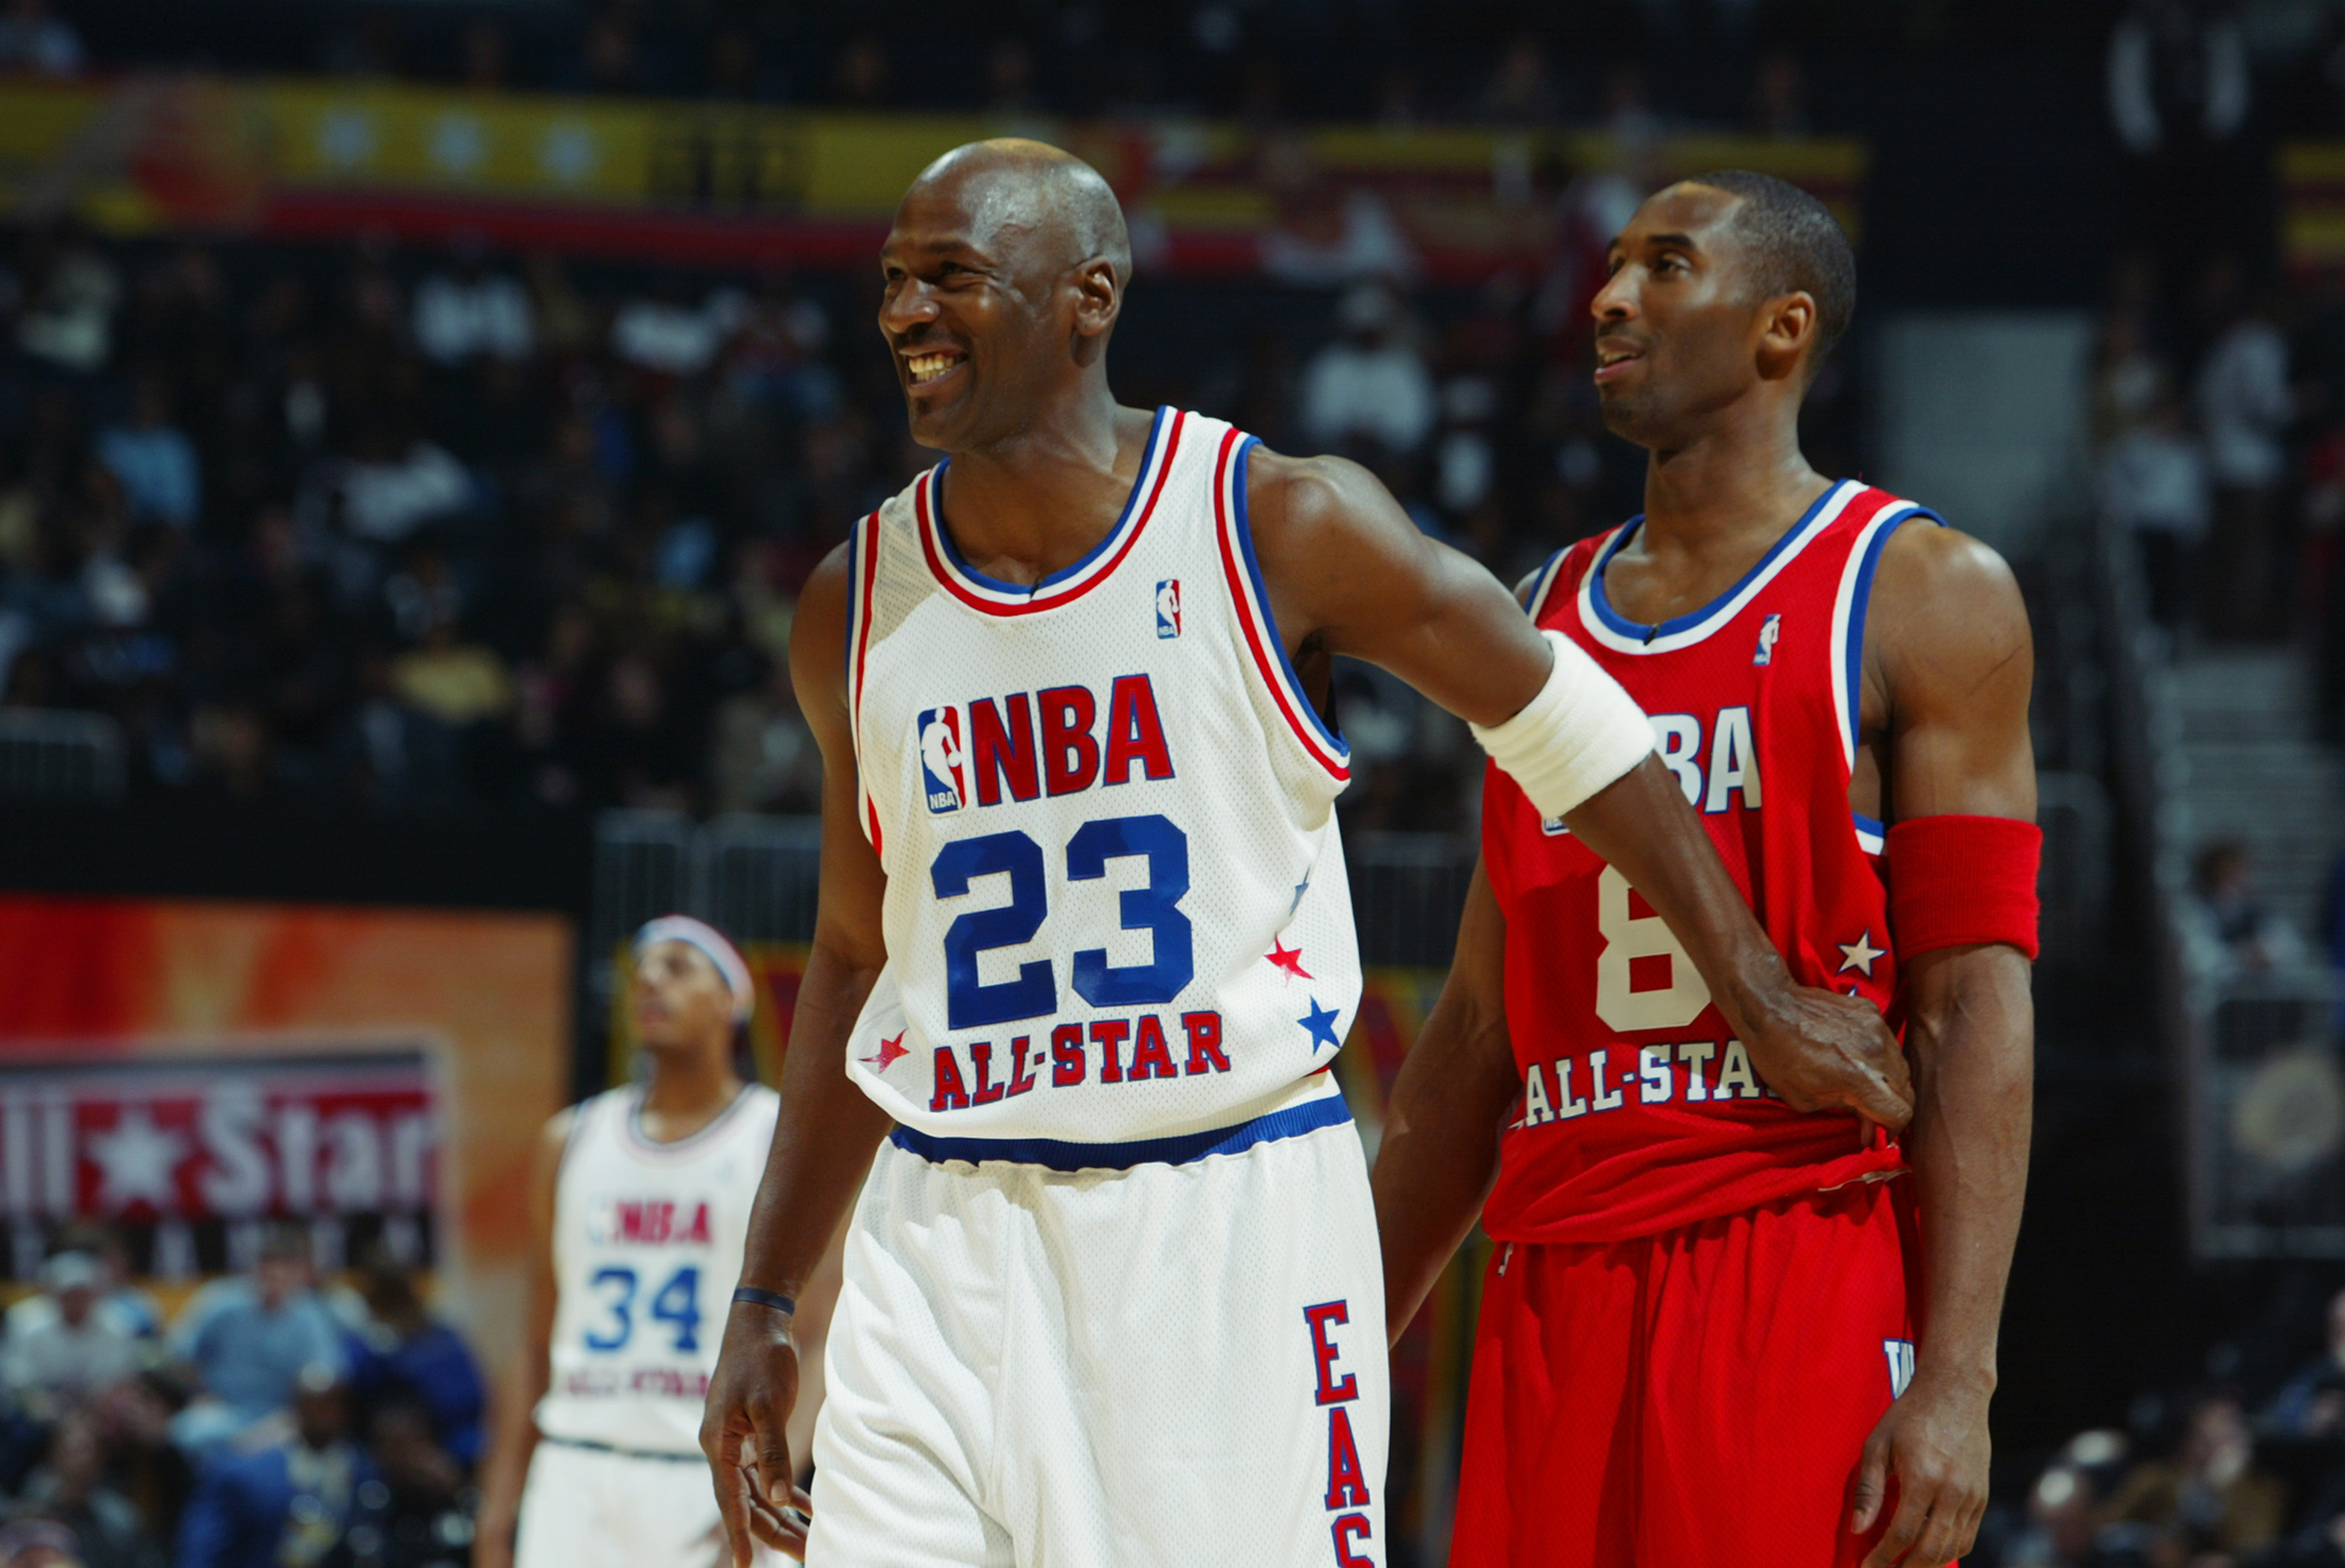 Kobe Bryant vs. Michael Jordan: How Their 10 Best Statistical